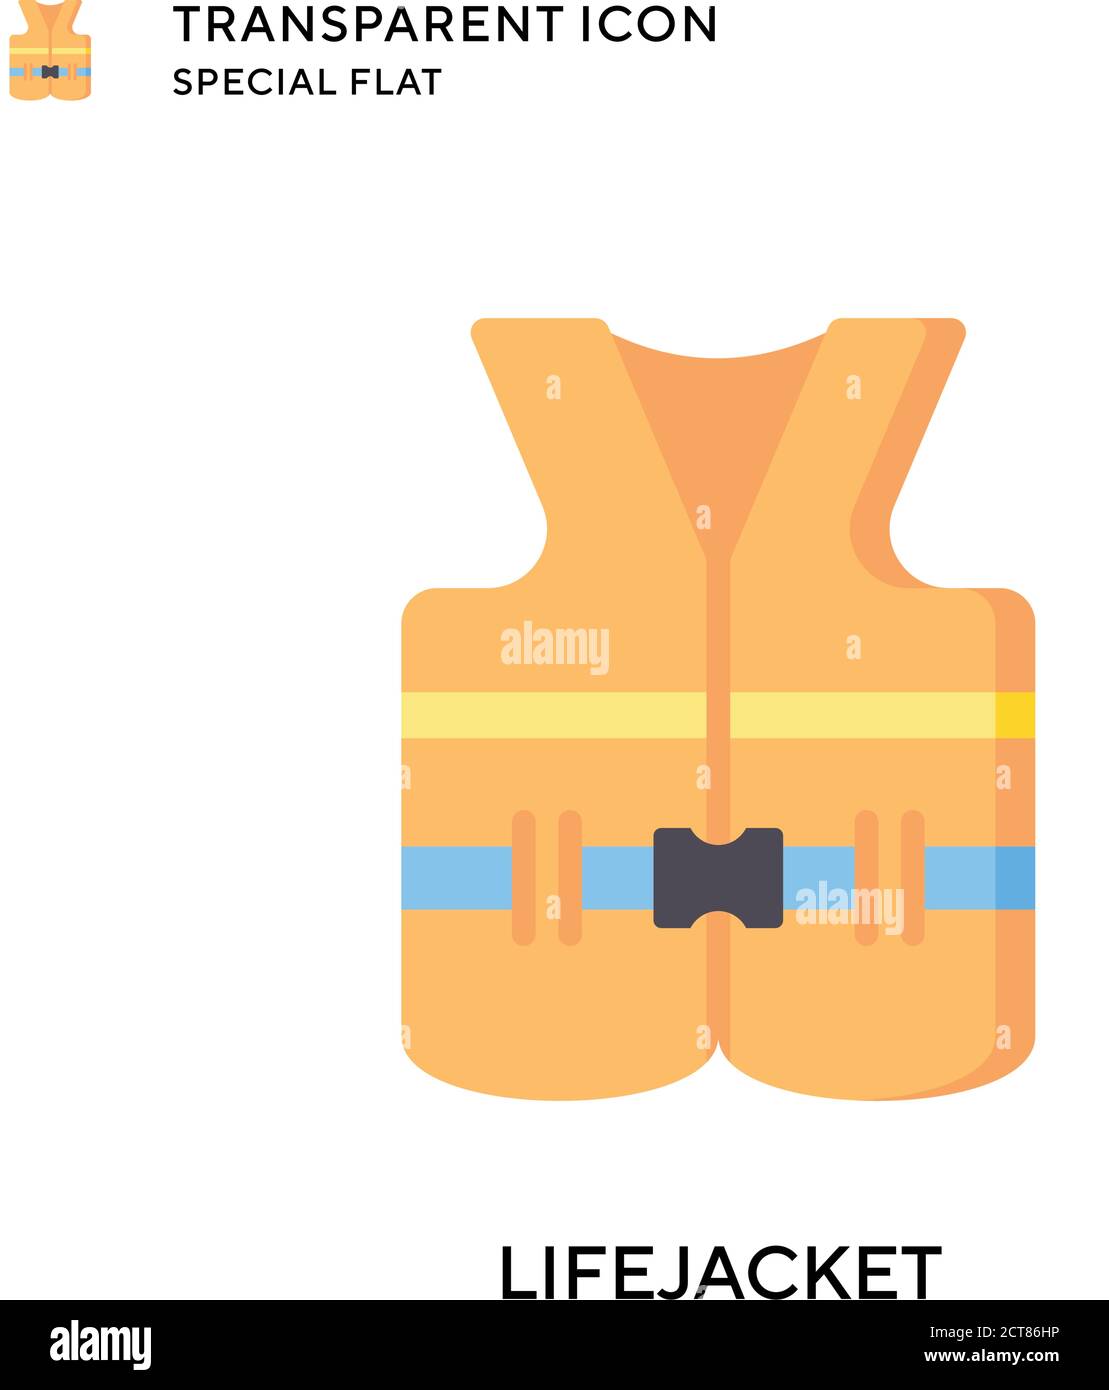 Lifejacket vector icon. Flat style illustration. EPS 10 vector. Stock Vector